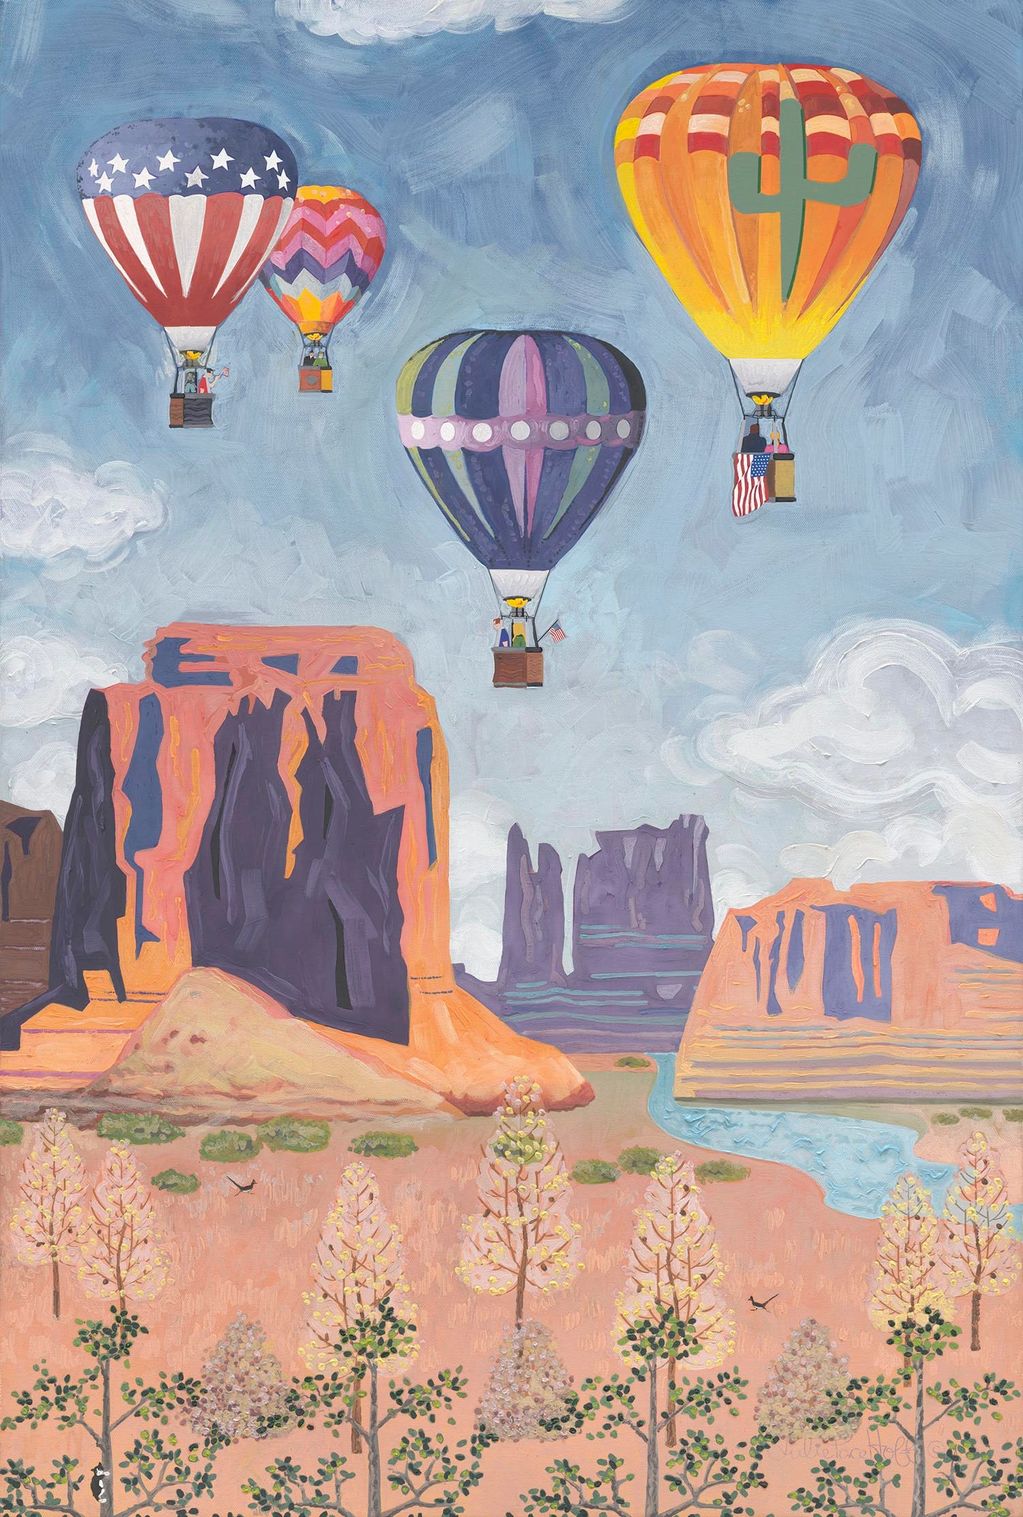 Hot air balloons flying over desert mountains.